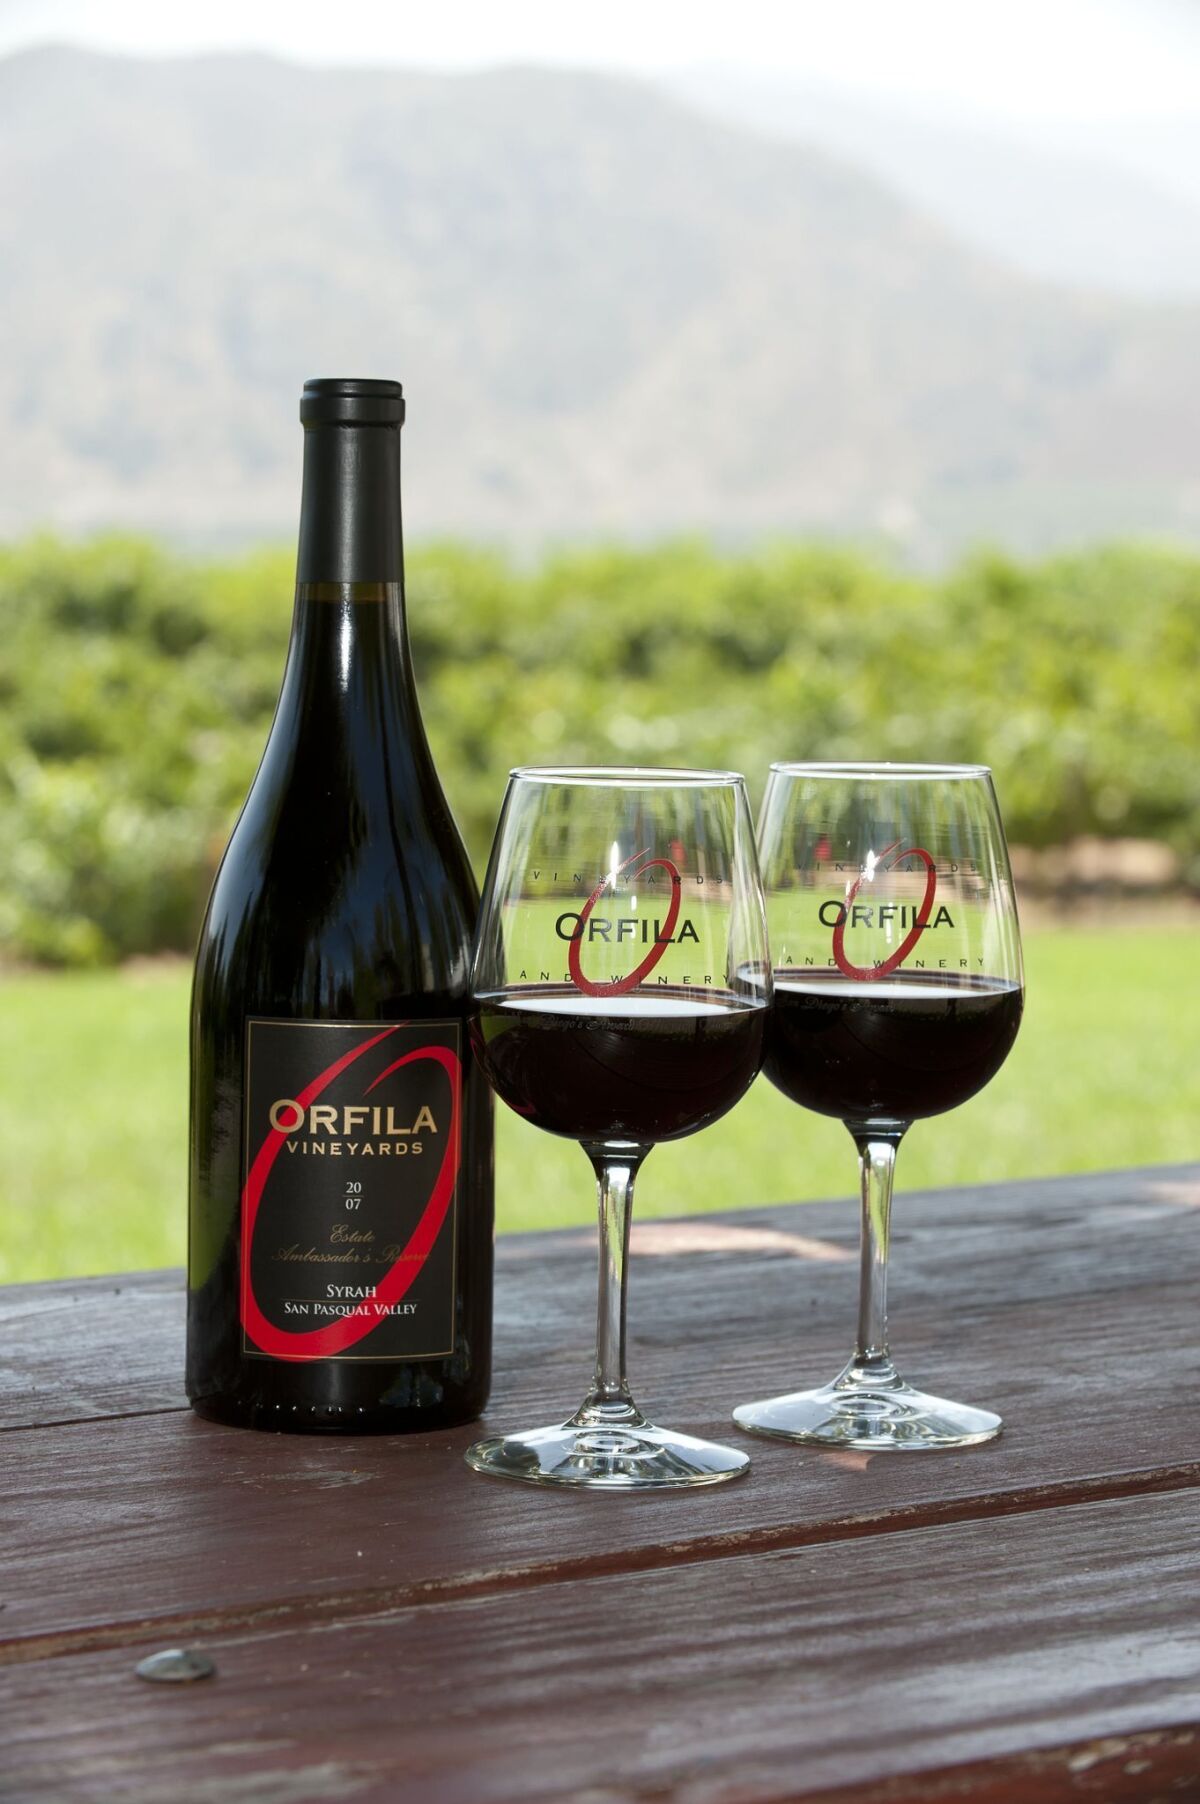 The view and vino at Orfila Vineyards & Winery in Escondido. — Dan Kirksey